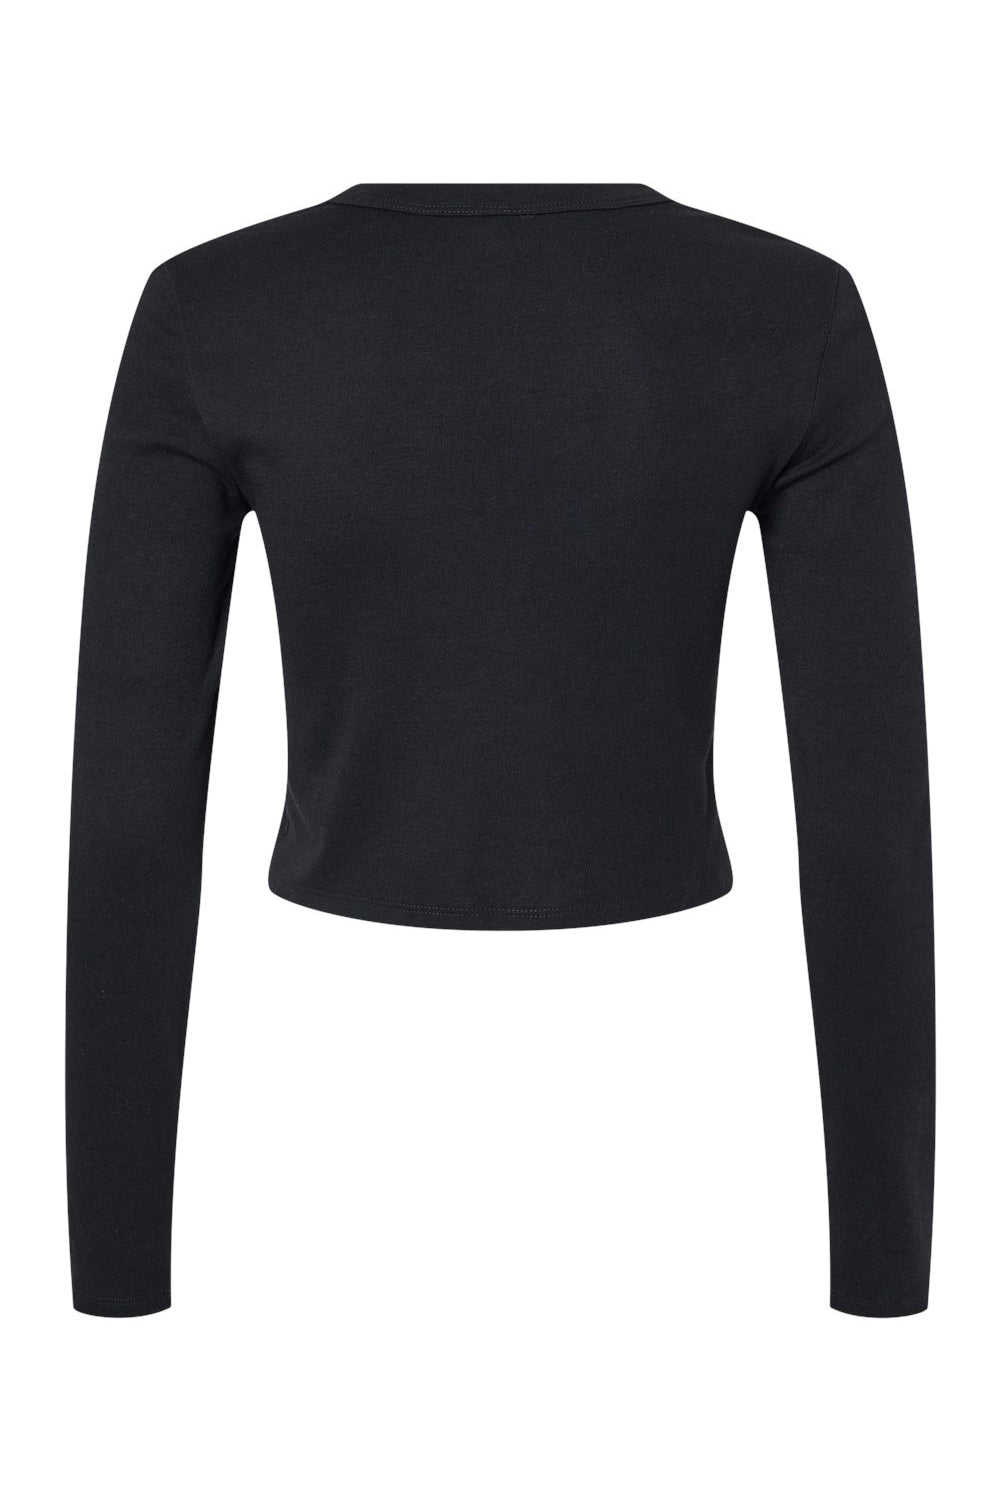 Bella + Canvas 1501 Womens Micro Rib Long Sleeve Crewneck T-Shirt Solid Black Blend Flat Back